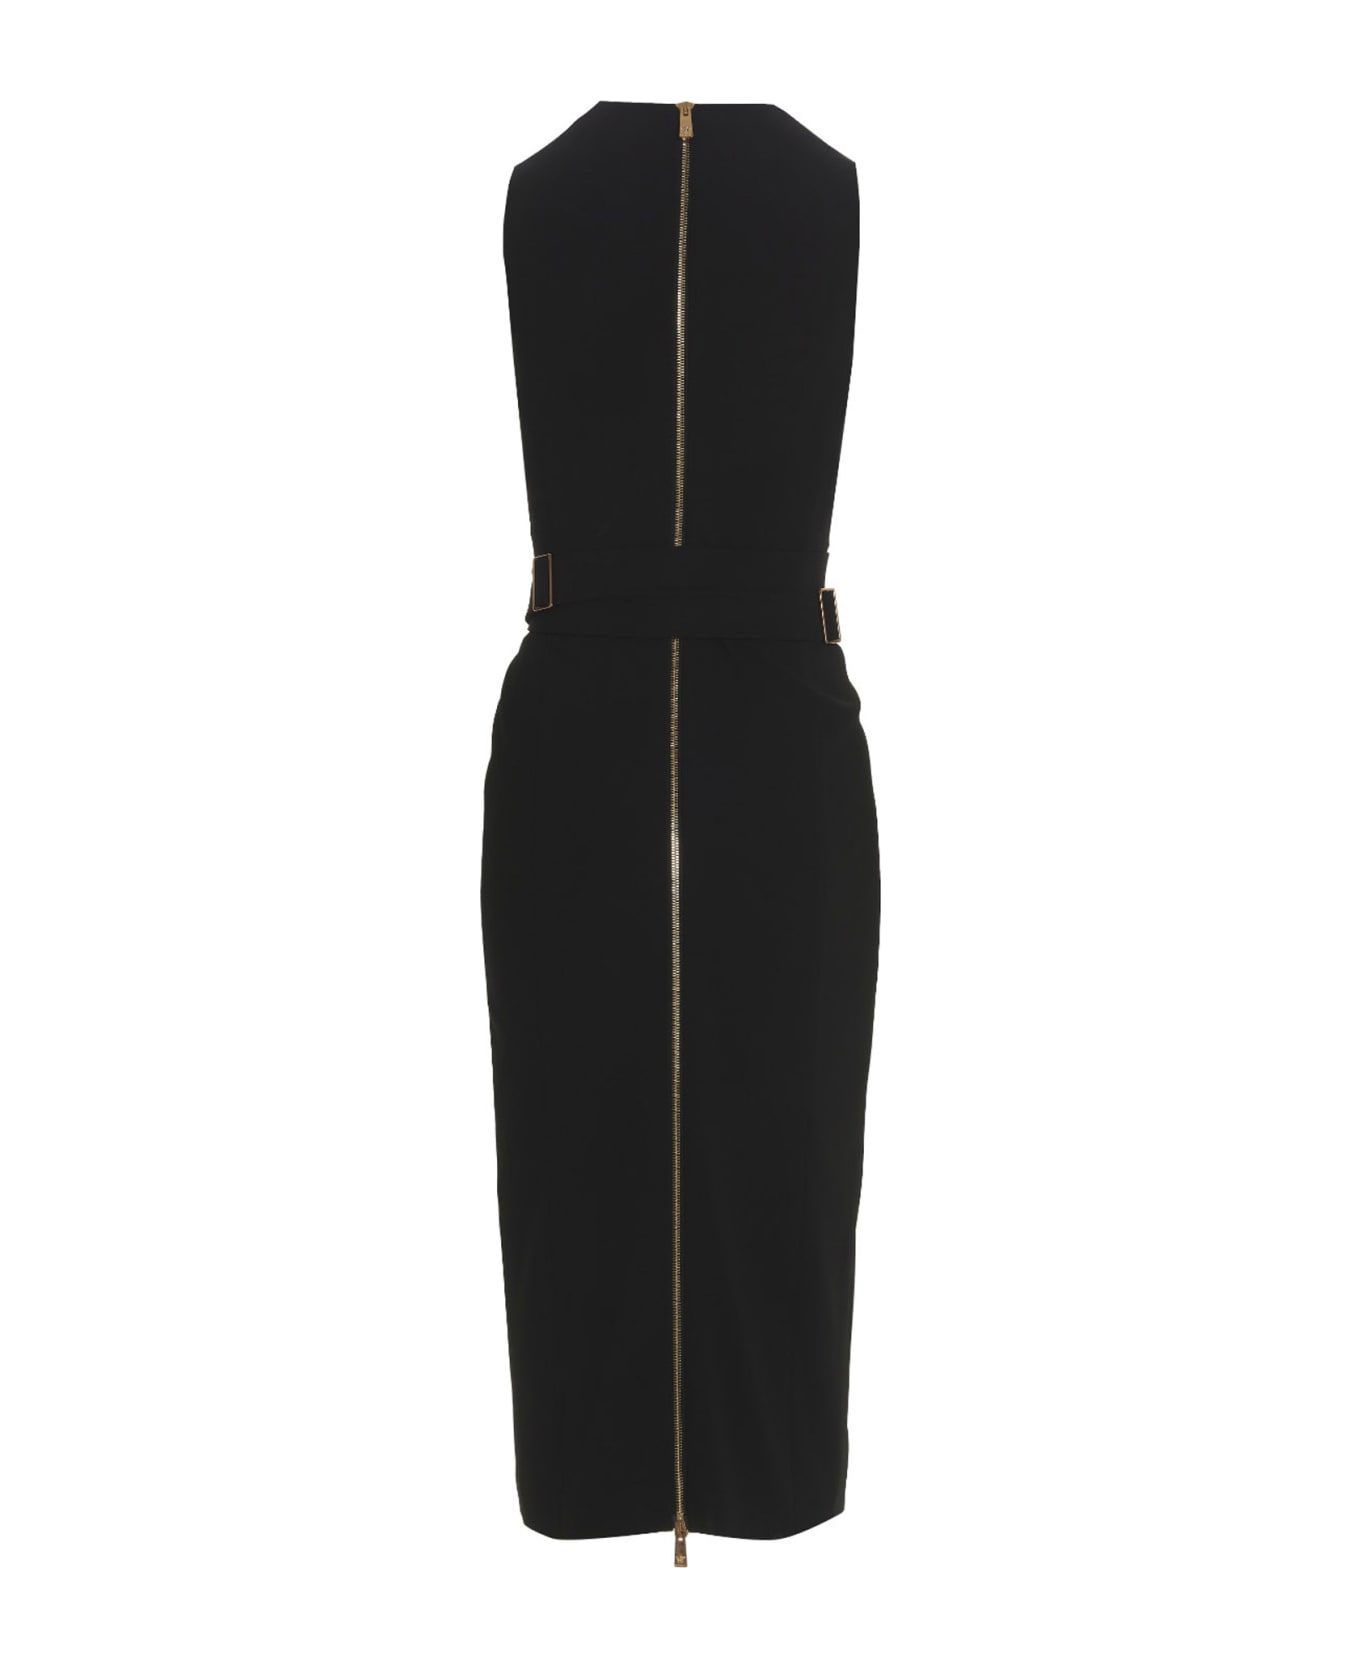 Versace 'medusa Biggie' Minidress - Black  